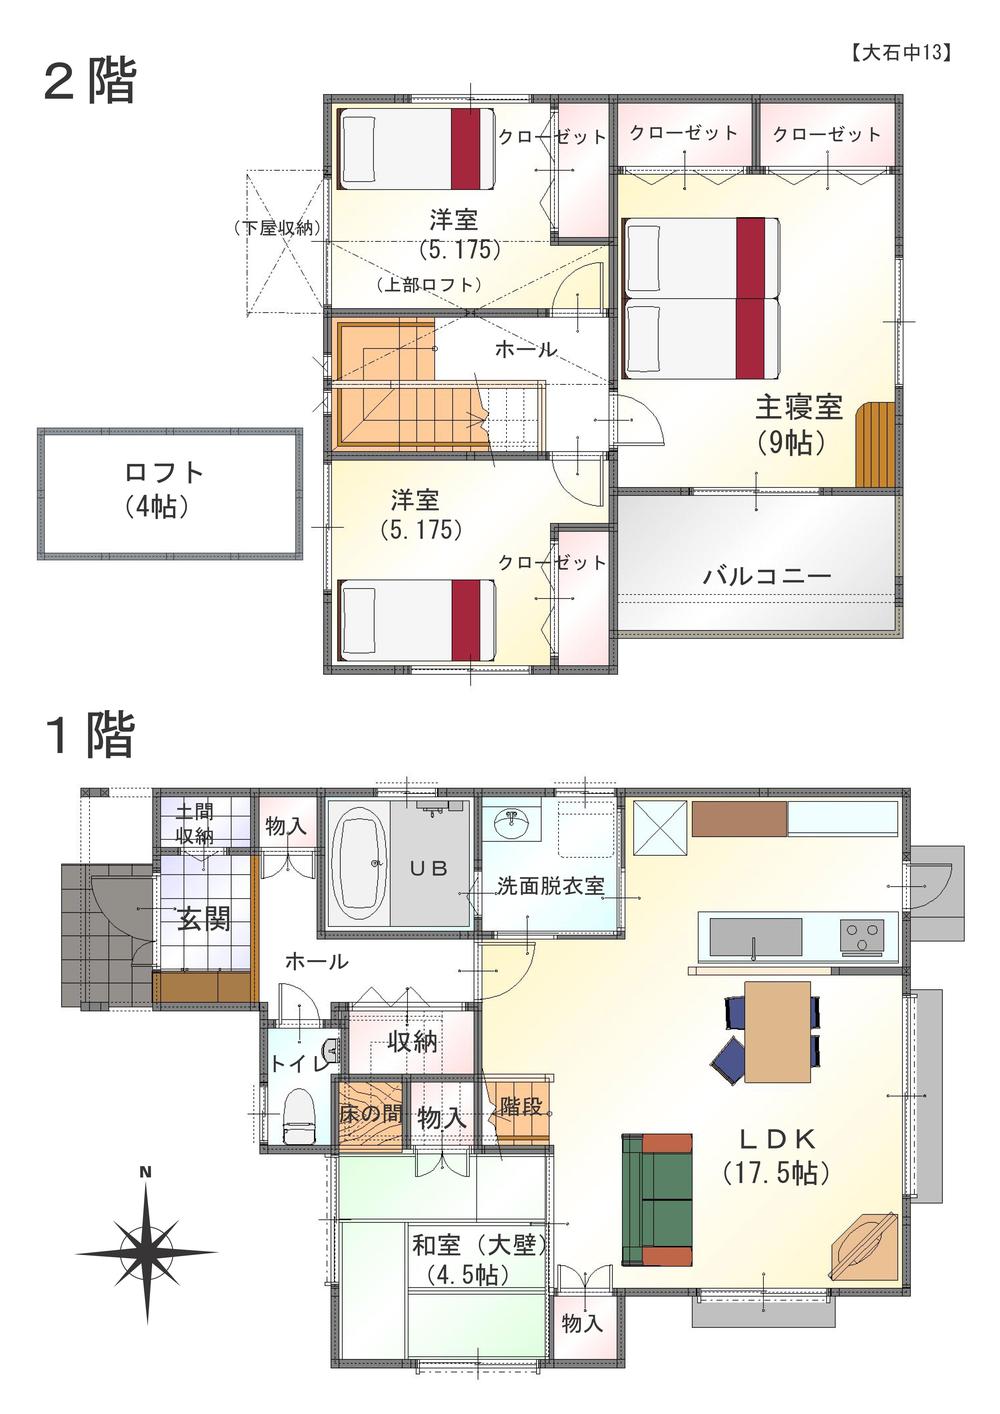 Floor plan. (No. 13 locations), Price 20,420,000 yen, 4LDK, Land area 138.78 sq m , Building area 102.26 sq m